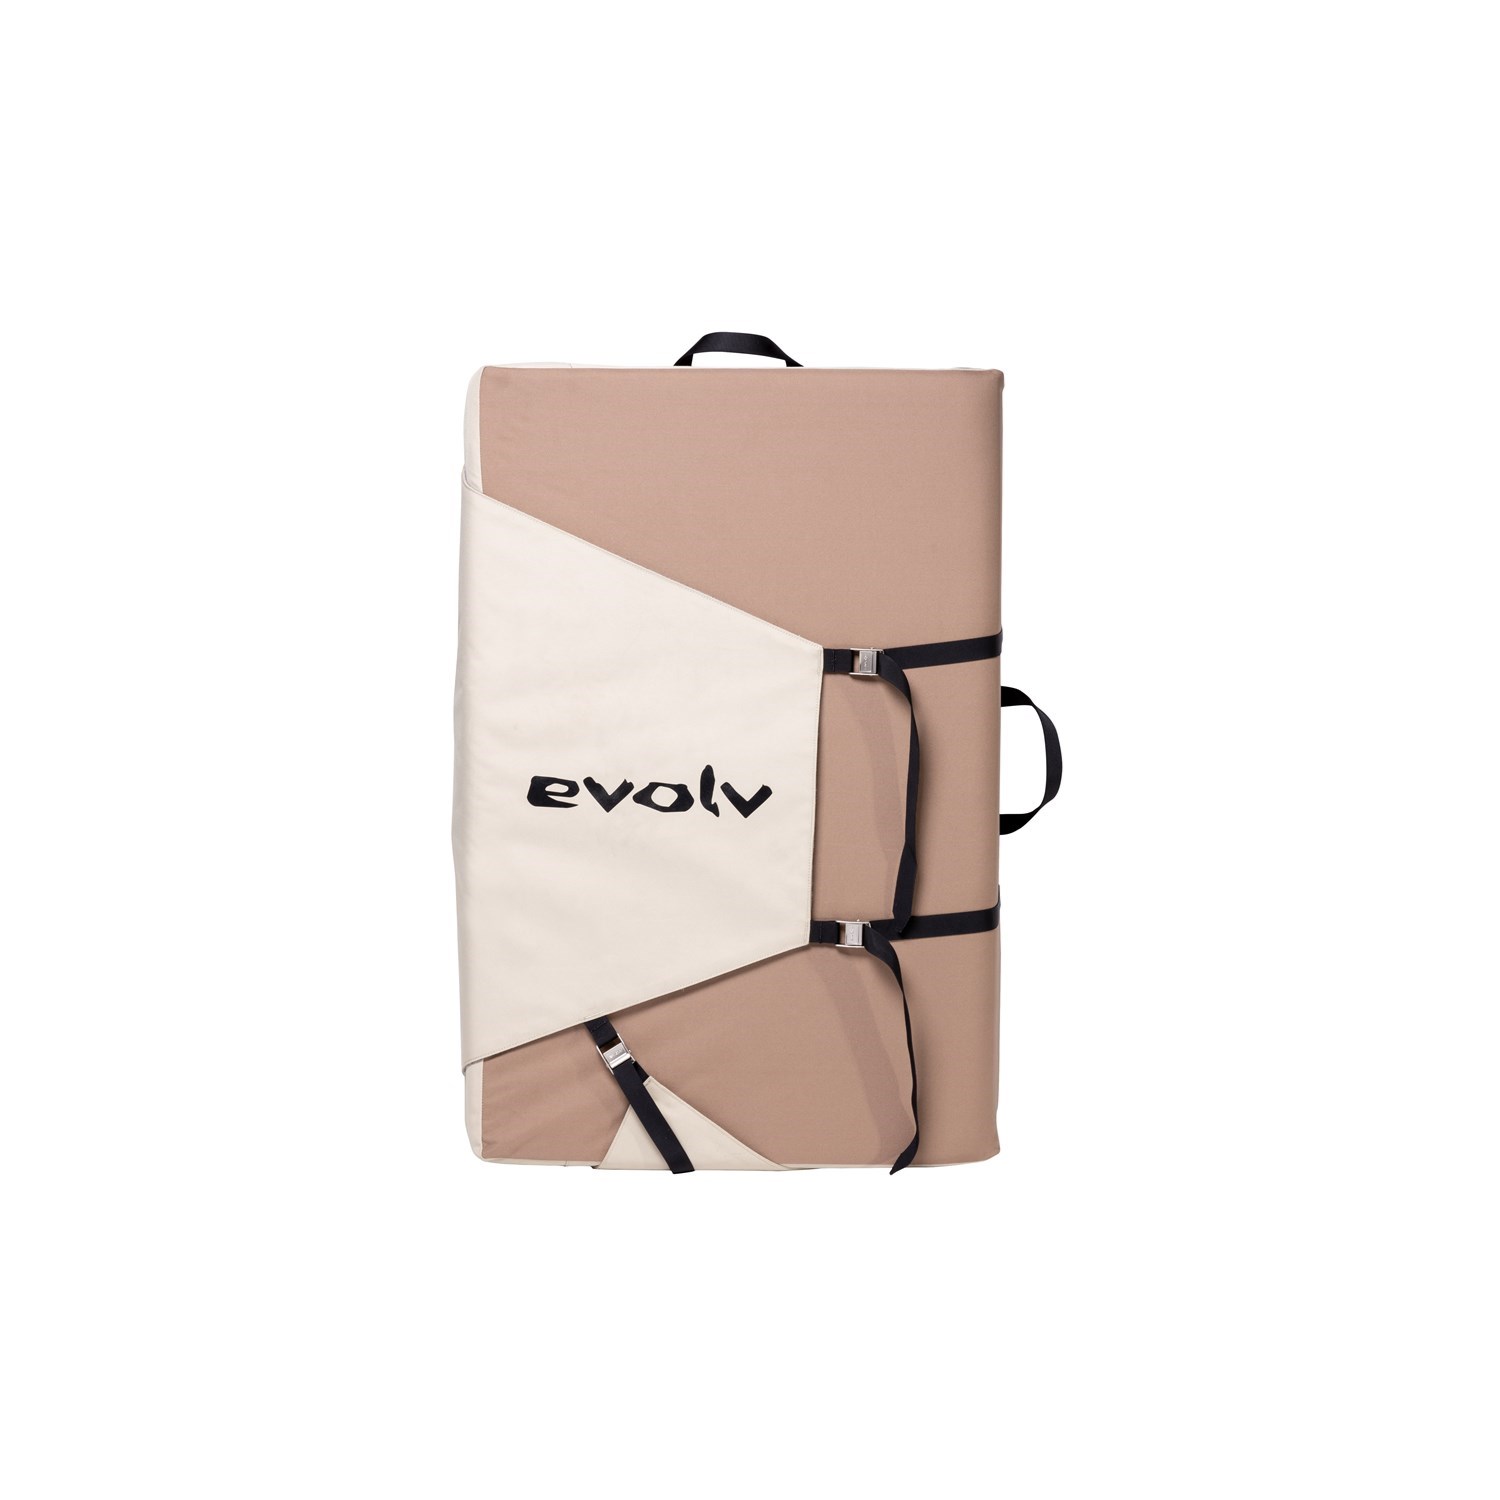 Evolv Chalk Growler - Chalk bag, Buy online